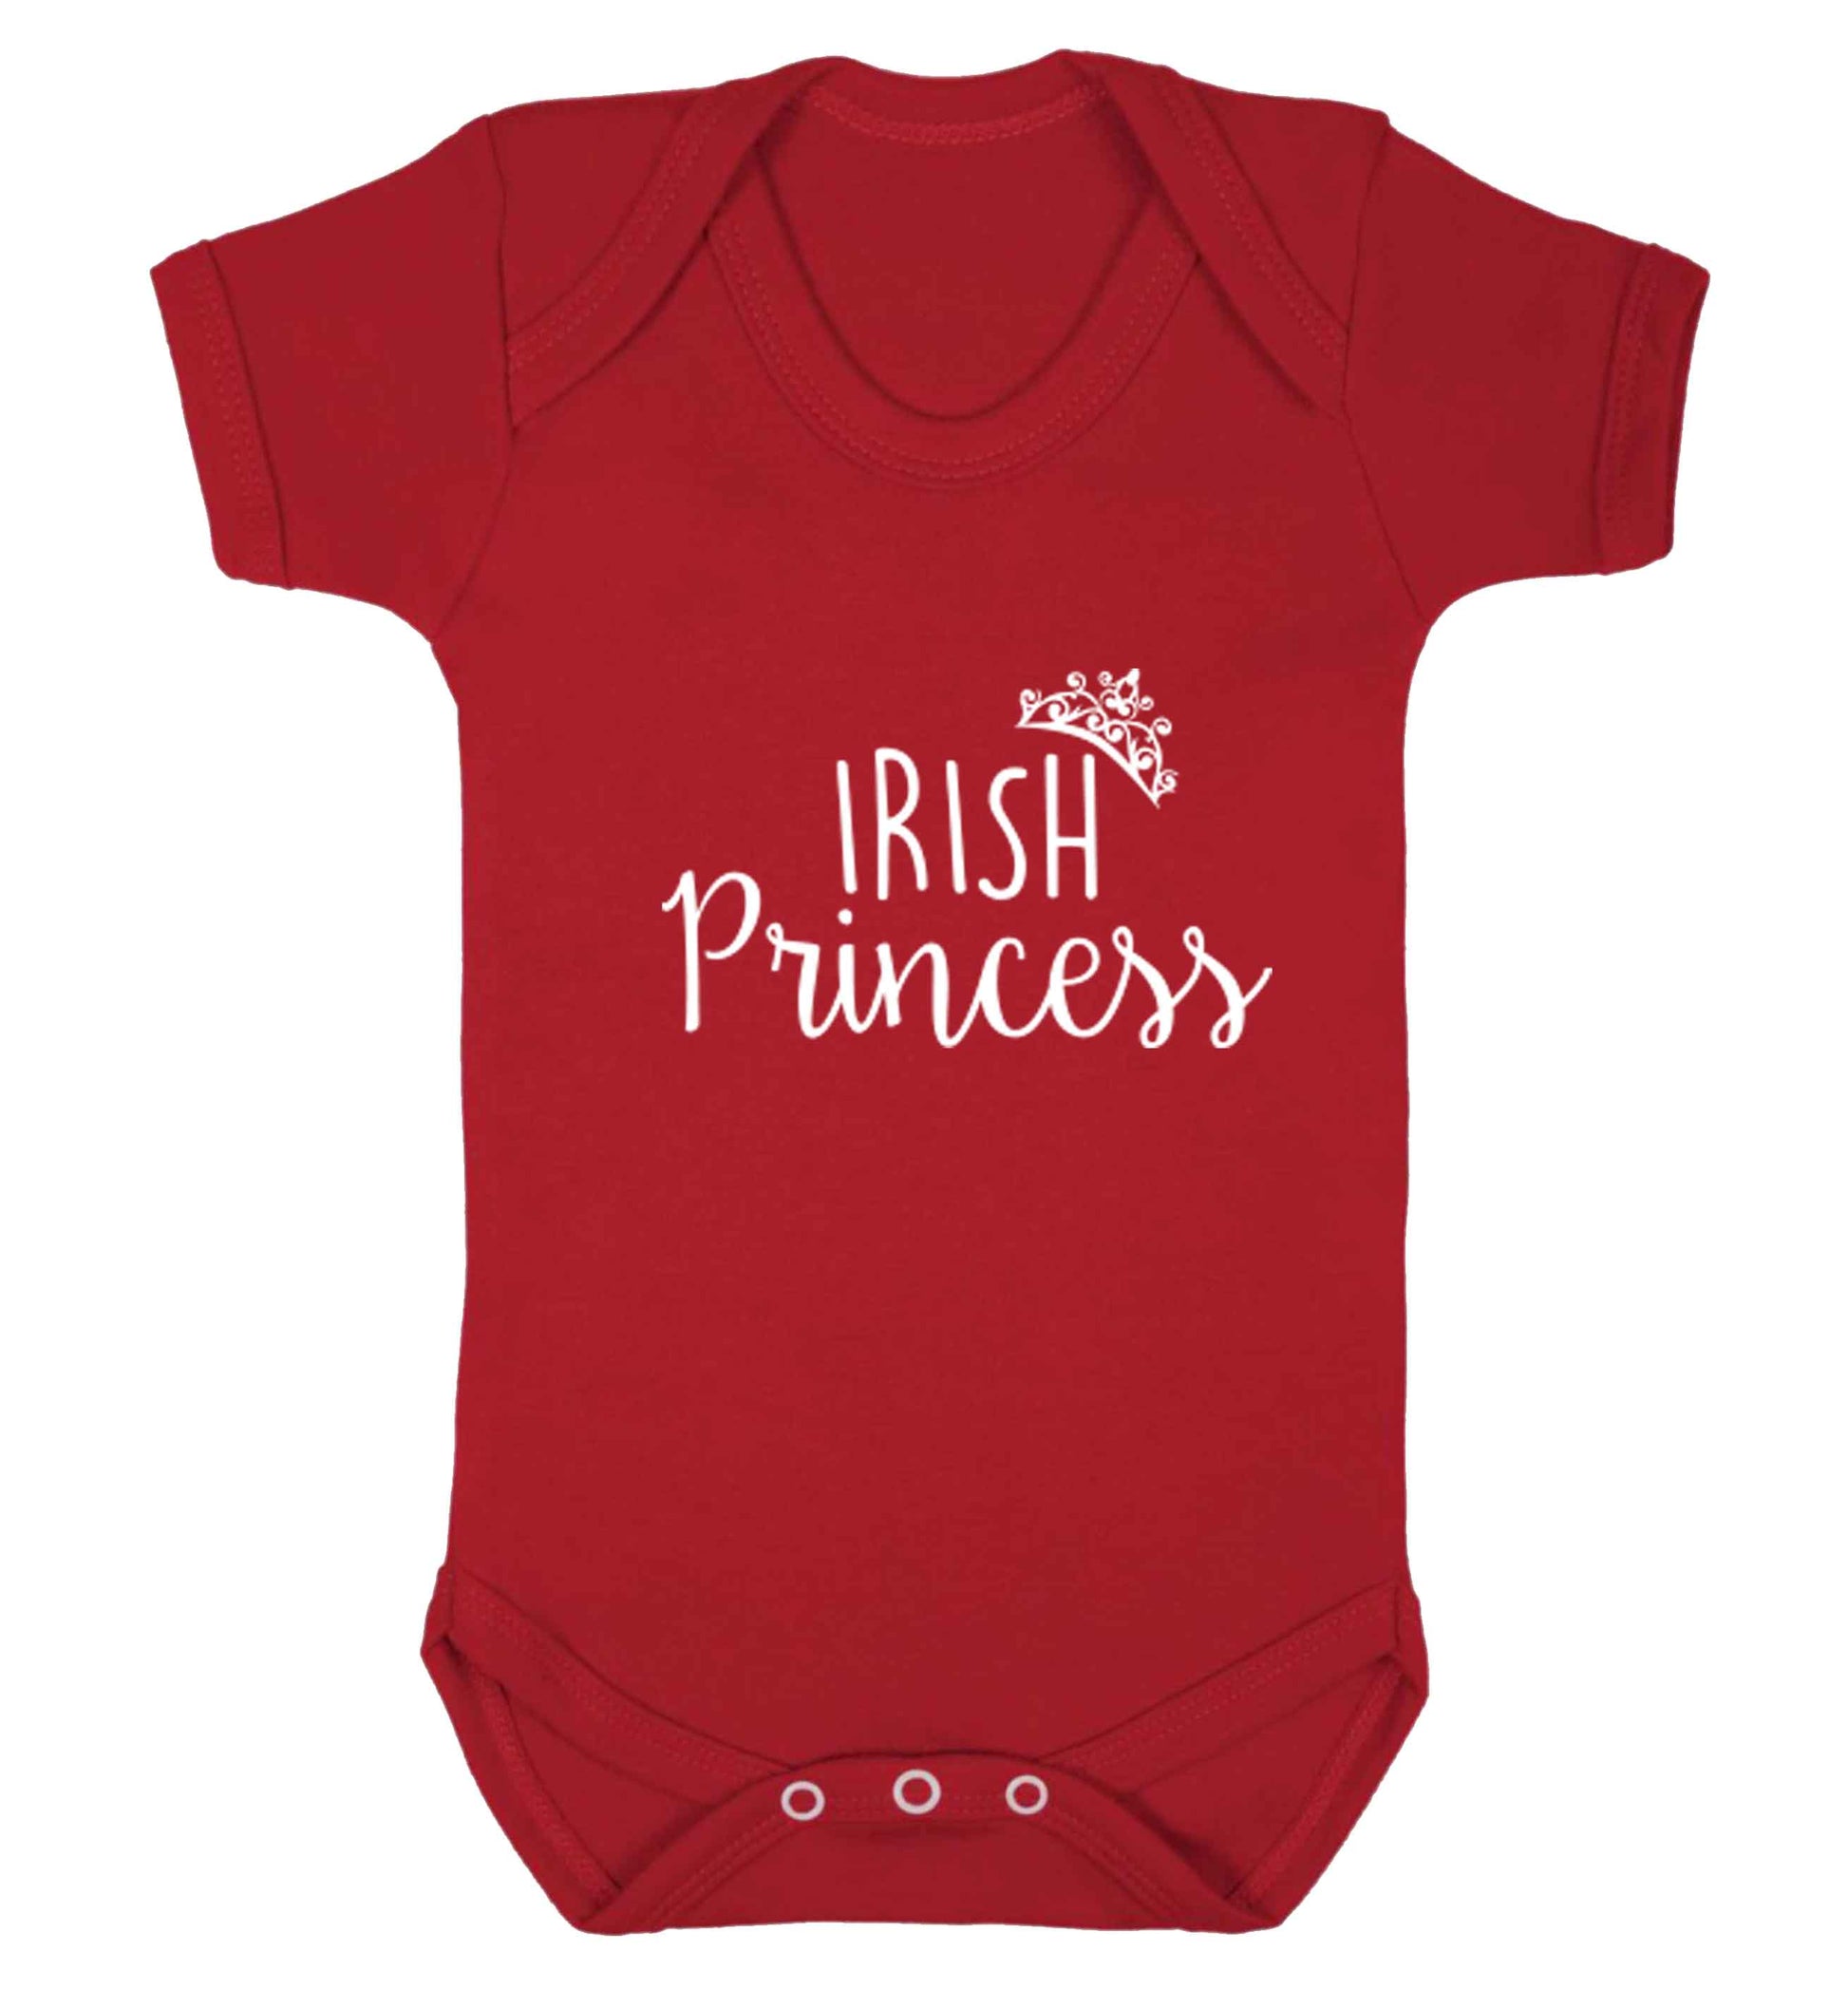 Irish princess baby vest red 18-24 months